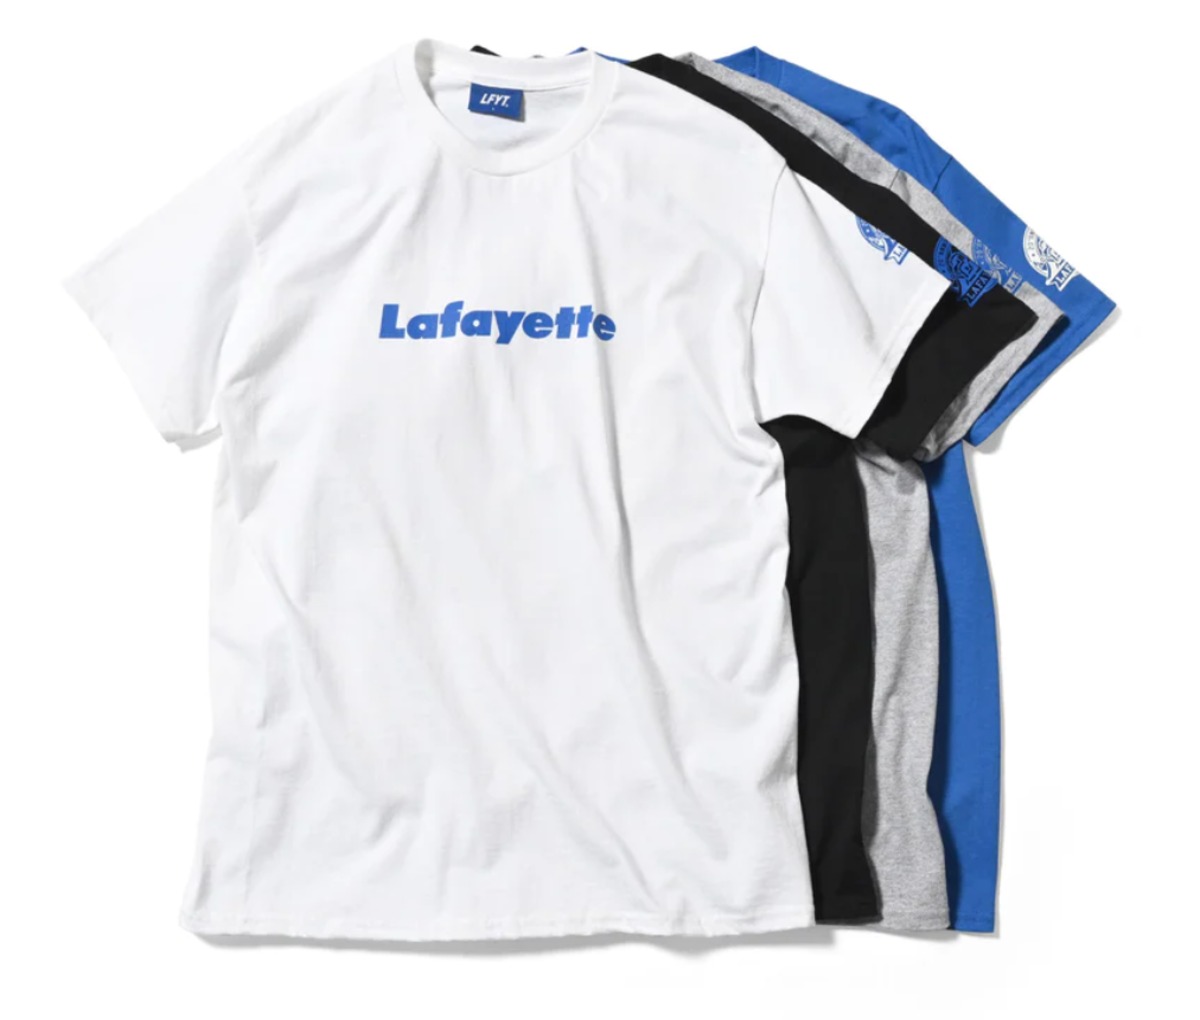 LFYT】LFYT Lafayette LOGO TEE 20TH ANNIVERSARY EDITION 半袖Tシャツ